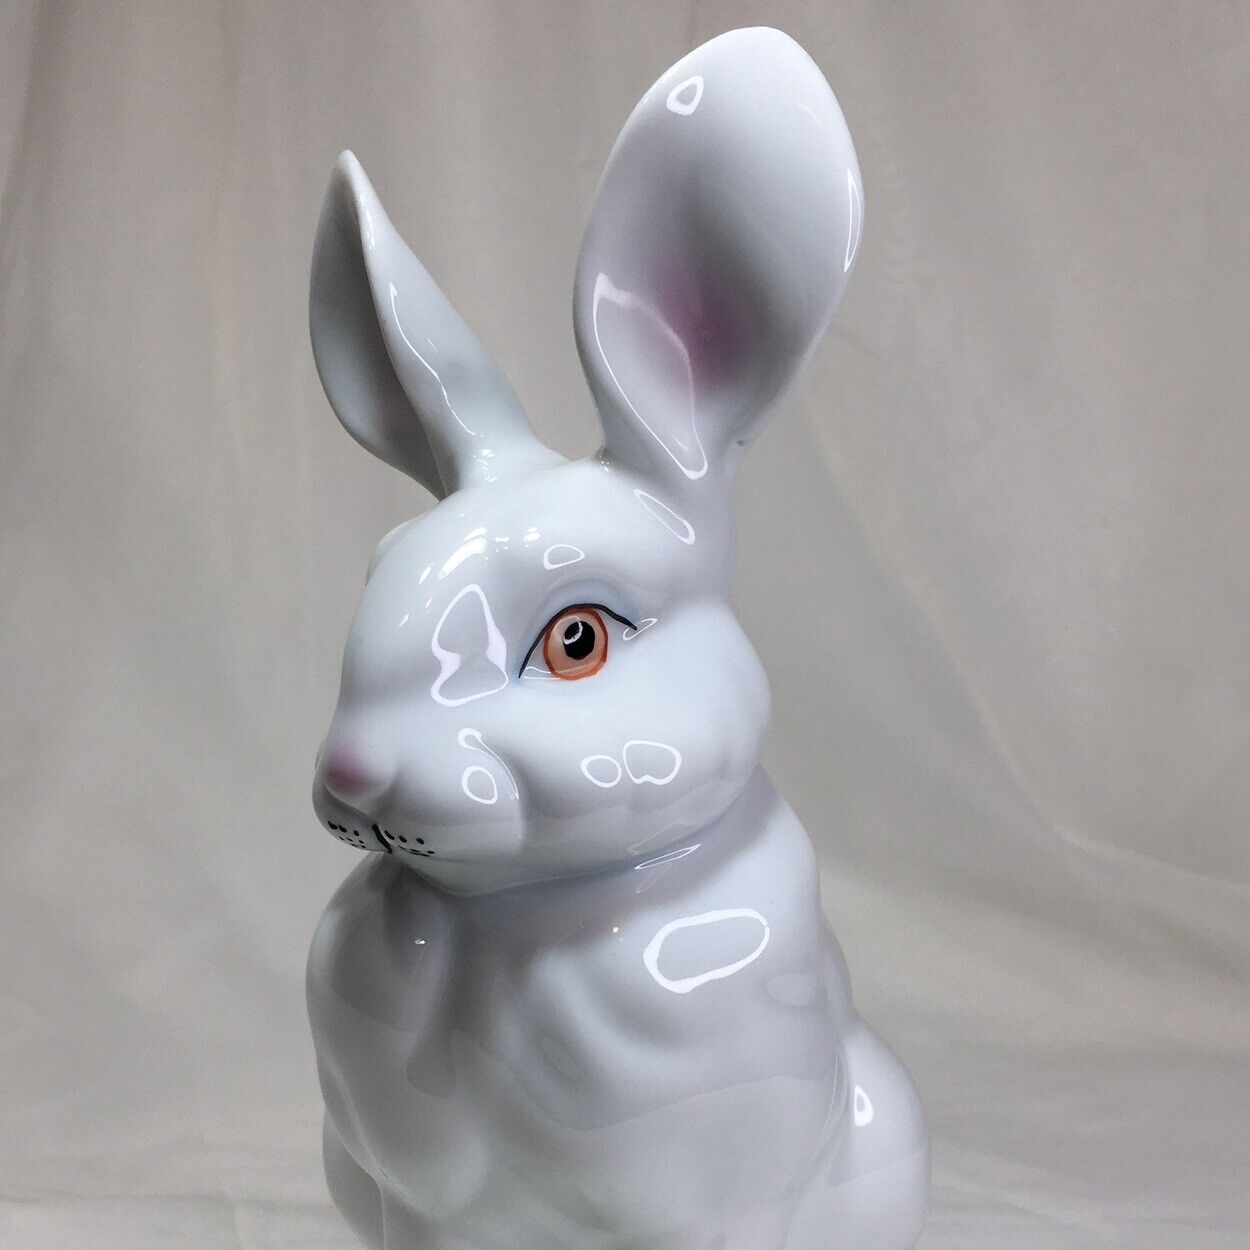 6.75” Vintage Bunny Rabbit Figurine, Mexico, Glazed Porcelain, Collectible❤️